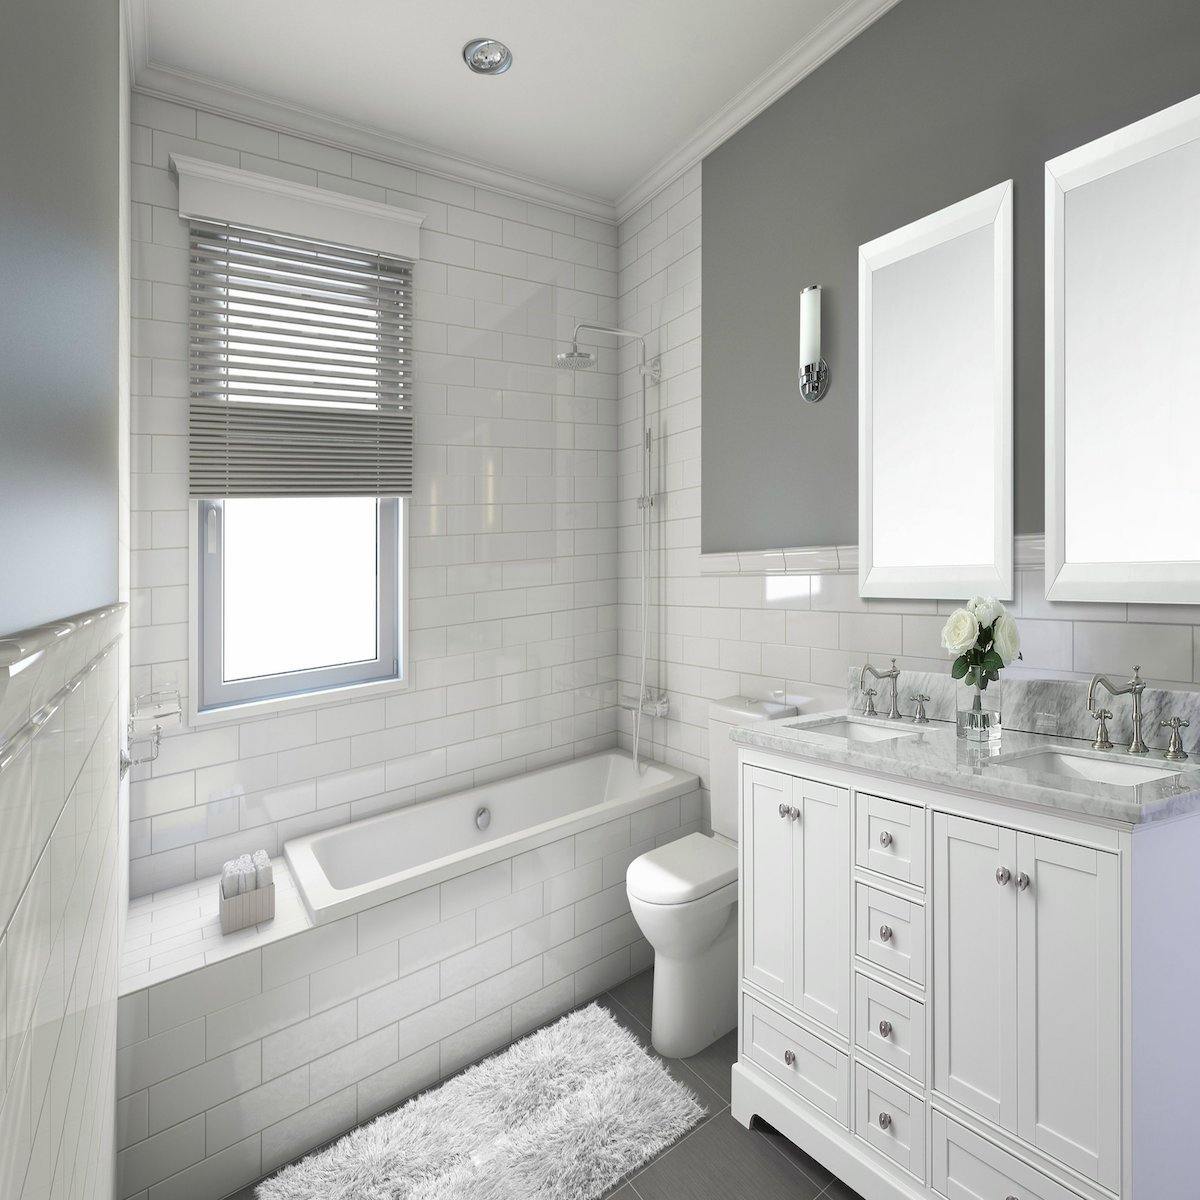 Ancerre Designs Audrey 60 Inch White Double Vanity in Bathroom